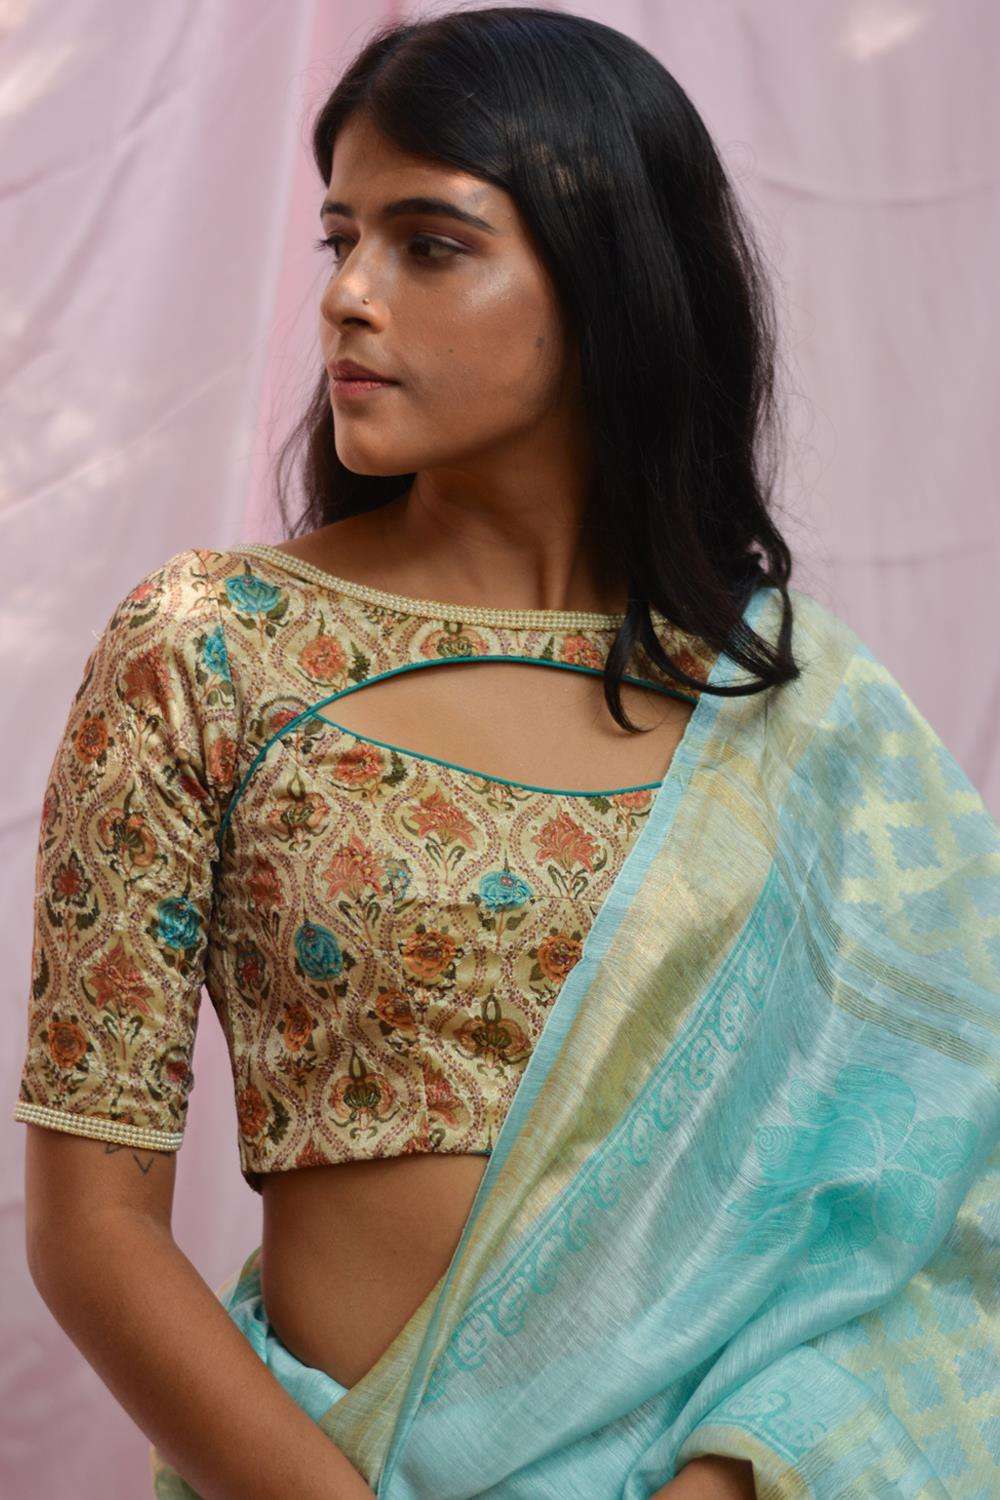 Silk saree blouse back neck designs for south indian bride - Simple Craft  Idea